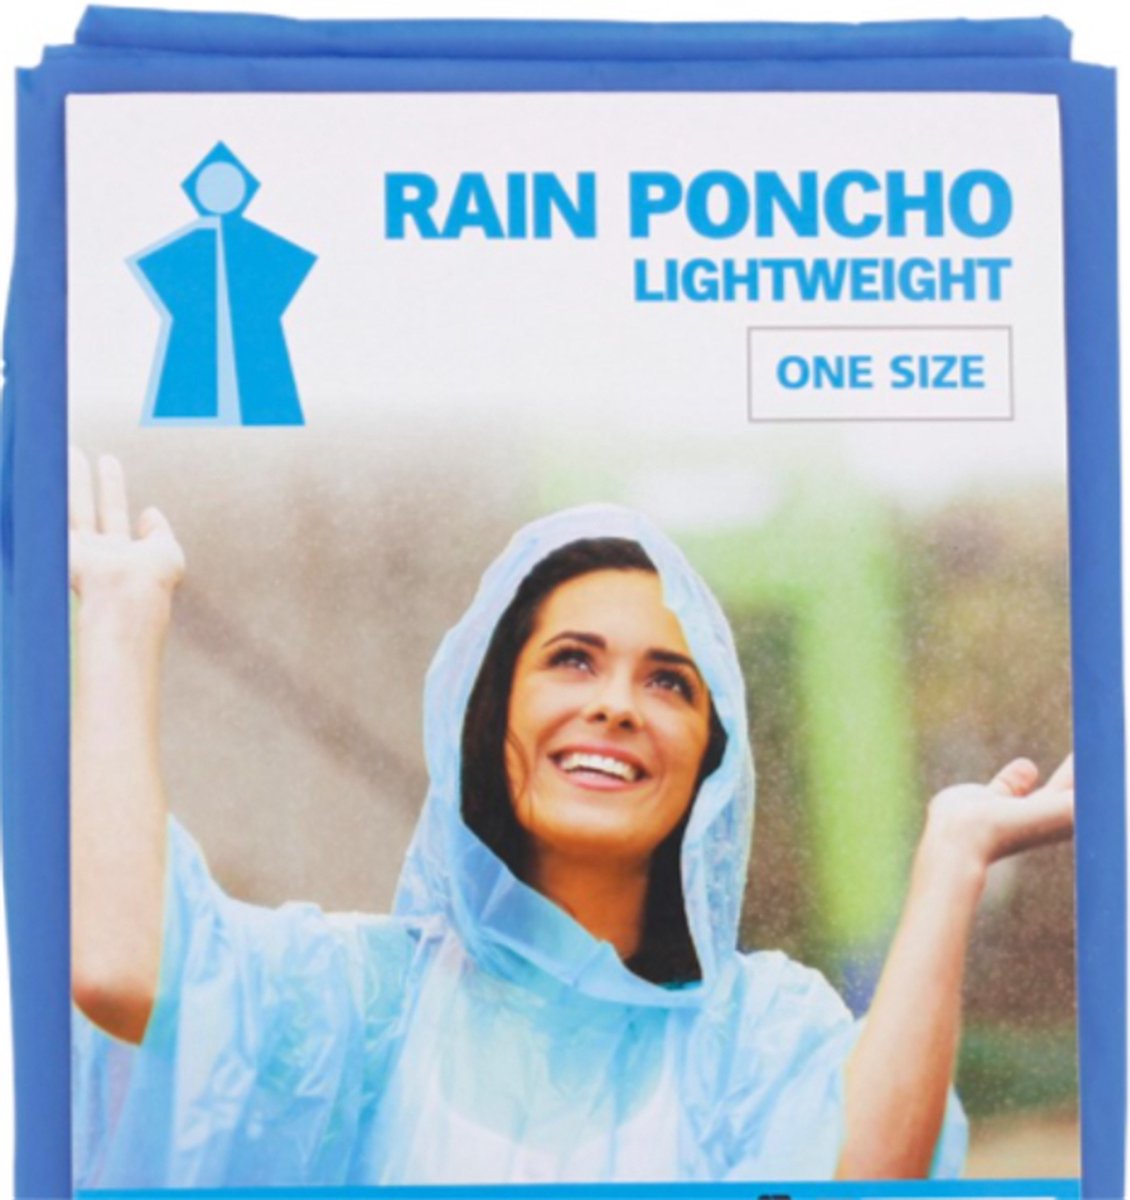 Poncho - Regen poncho - Regen jas - Licht gewicht - Beschermende kleding - Blauw - ONE SIZE - Rain Poncho - Ideaal voor op de fiets.